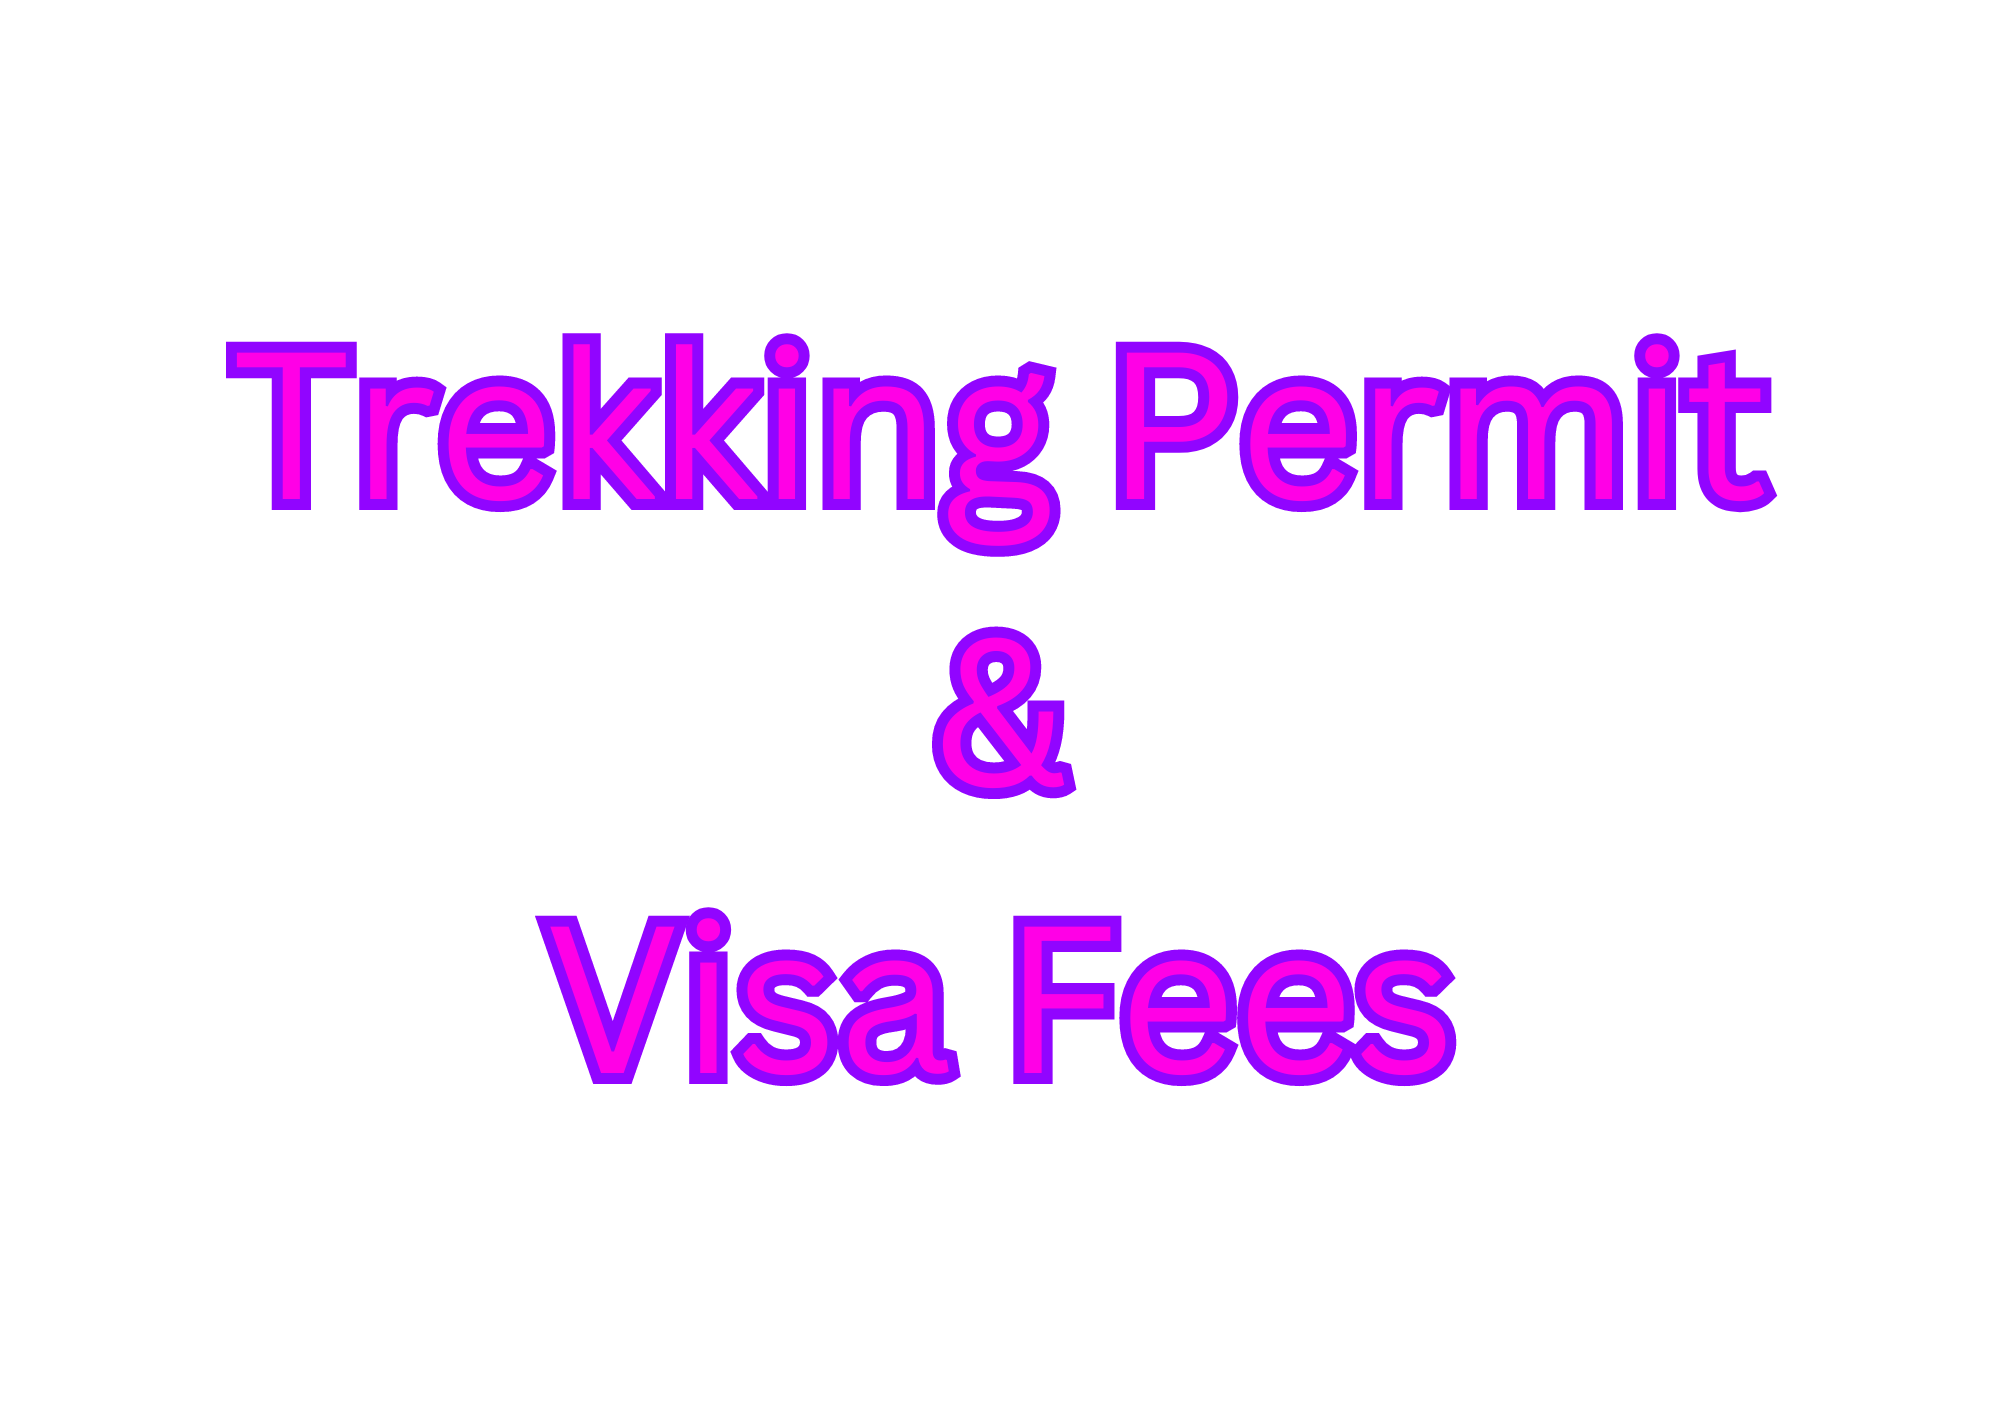 Trekking permit & Visa Fees